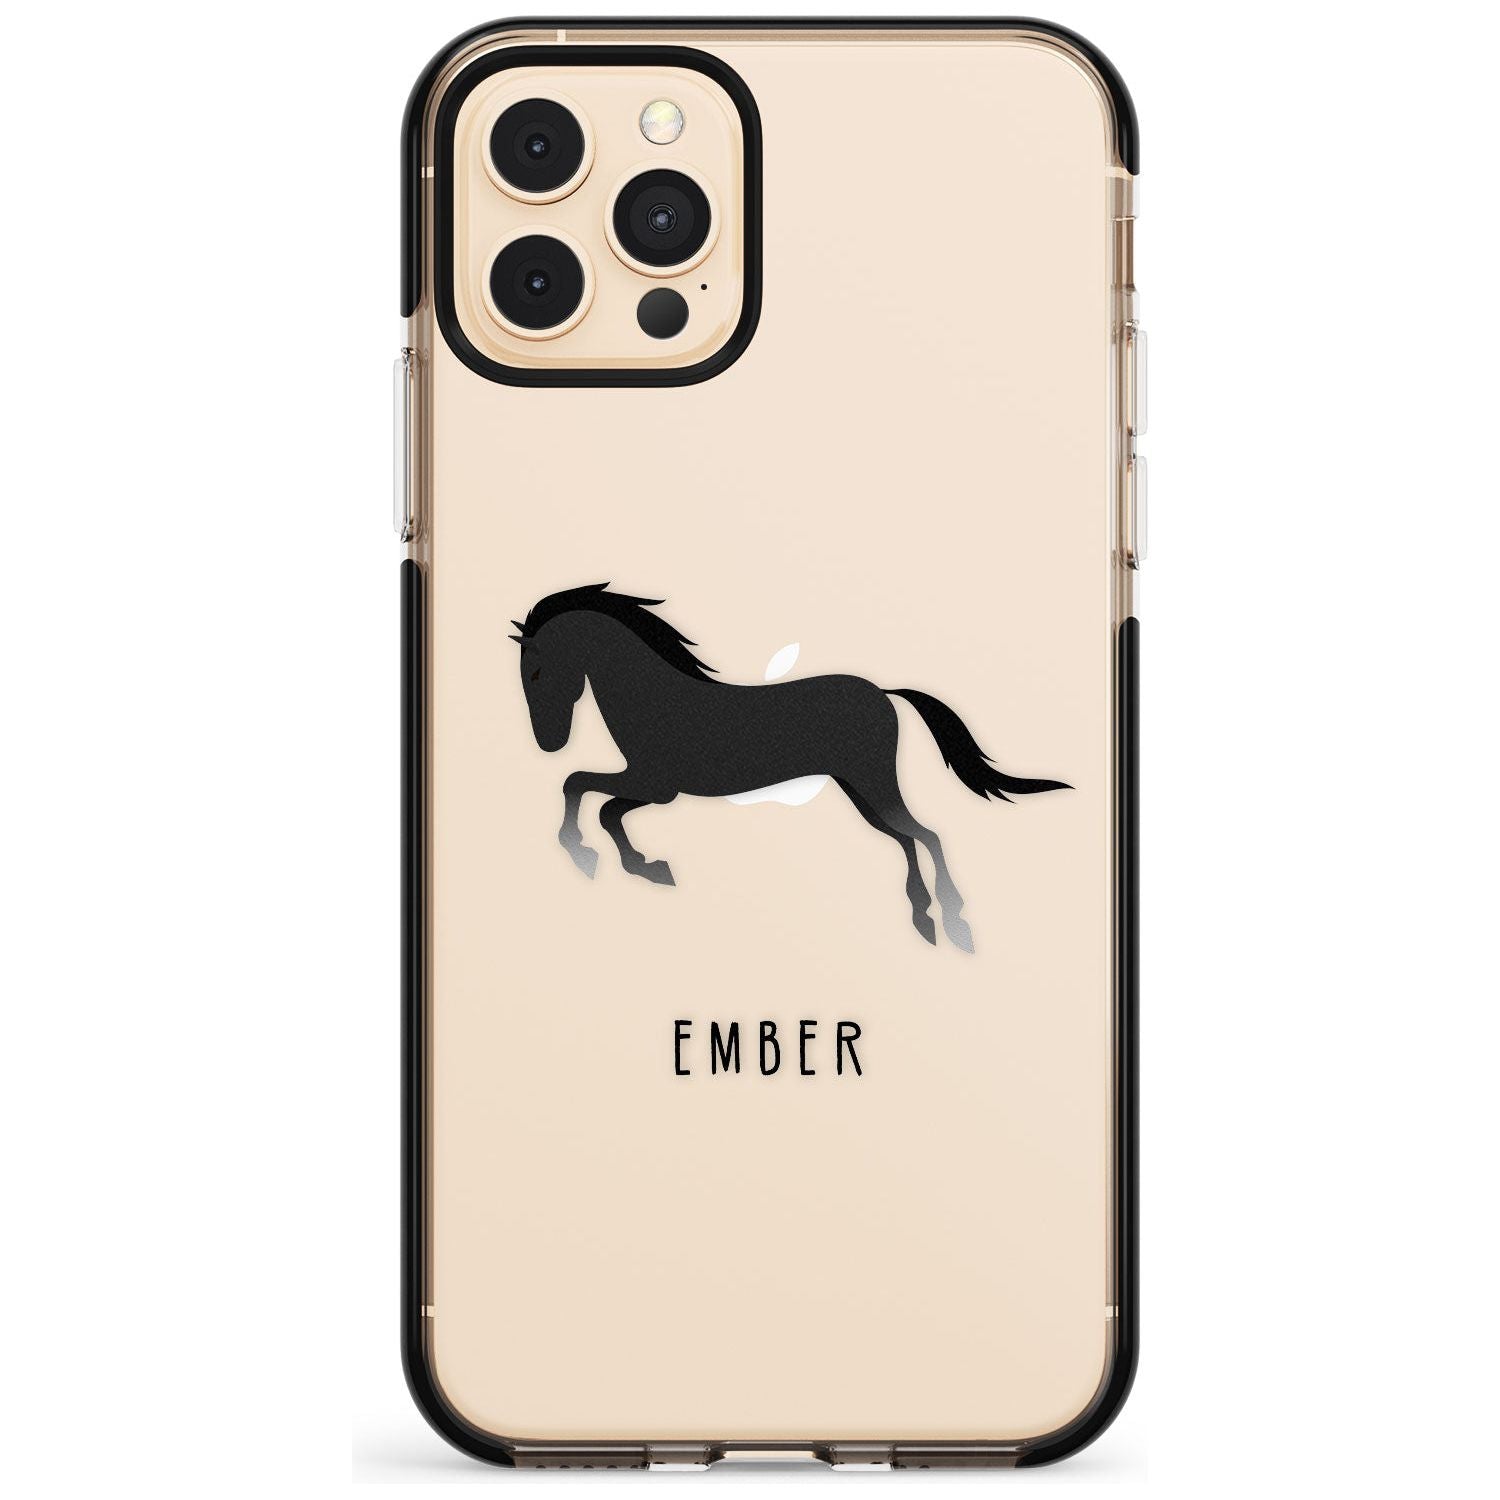 Personalised Black Horse Black Impact Phone Case for iPhone 11